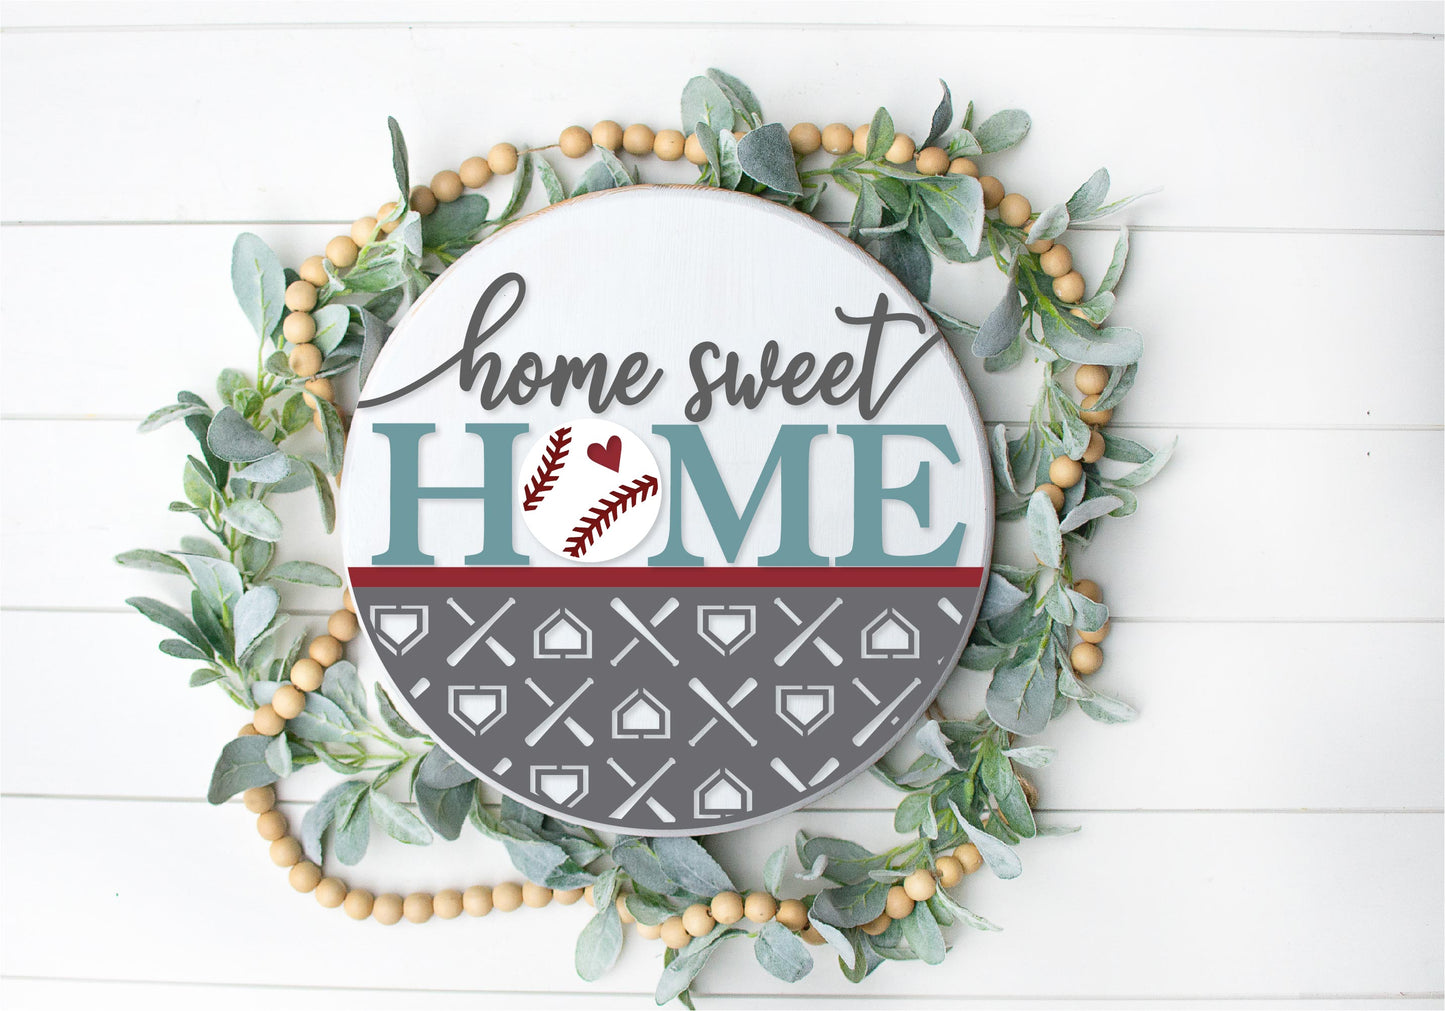 Home sweet home baseball sign